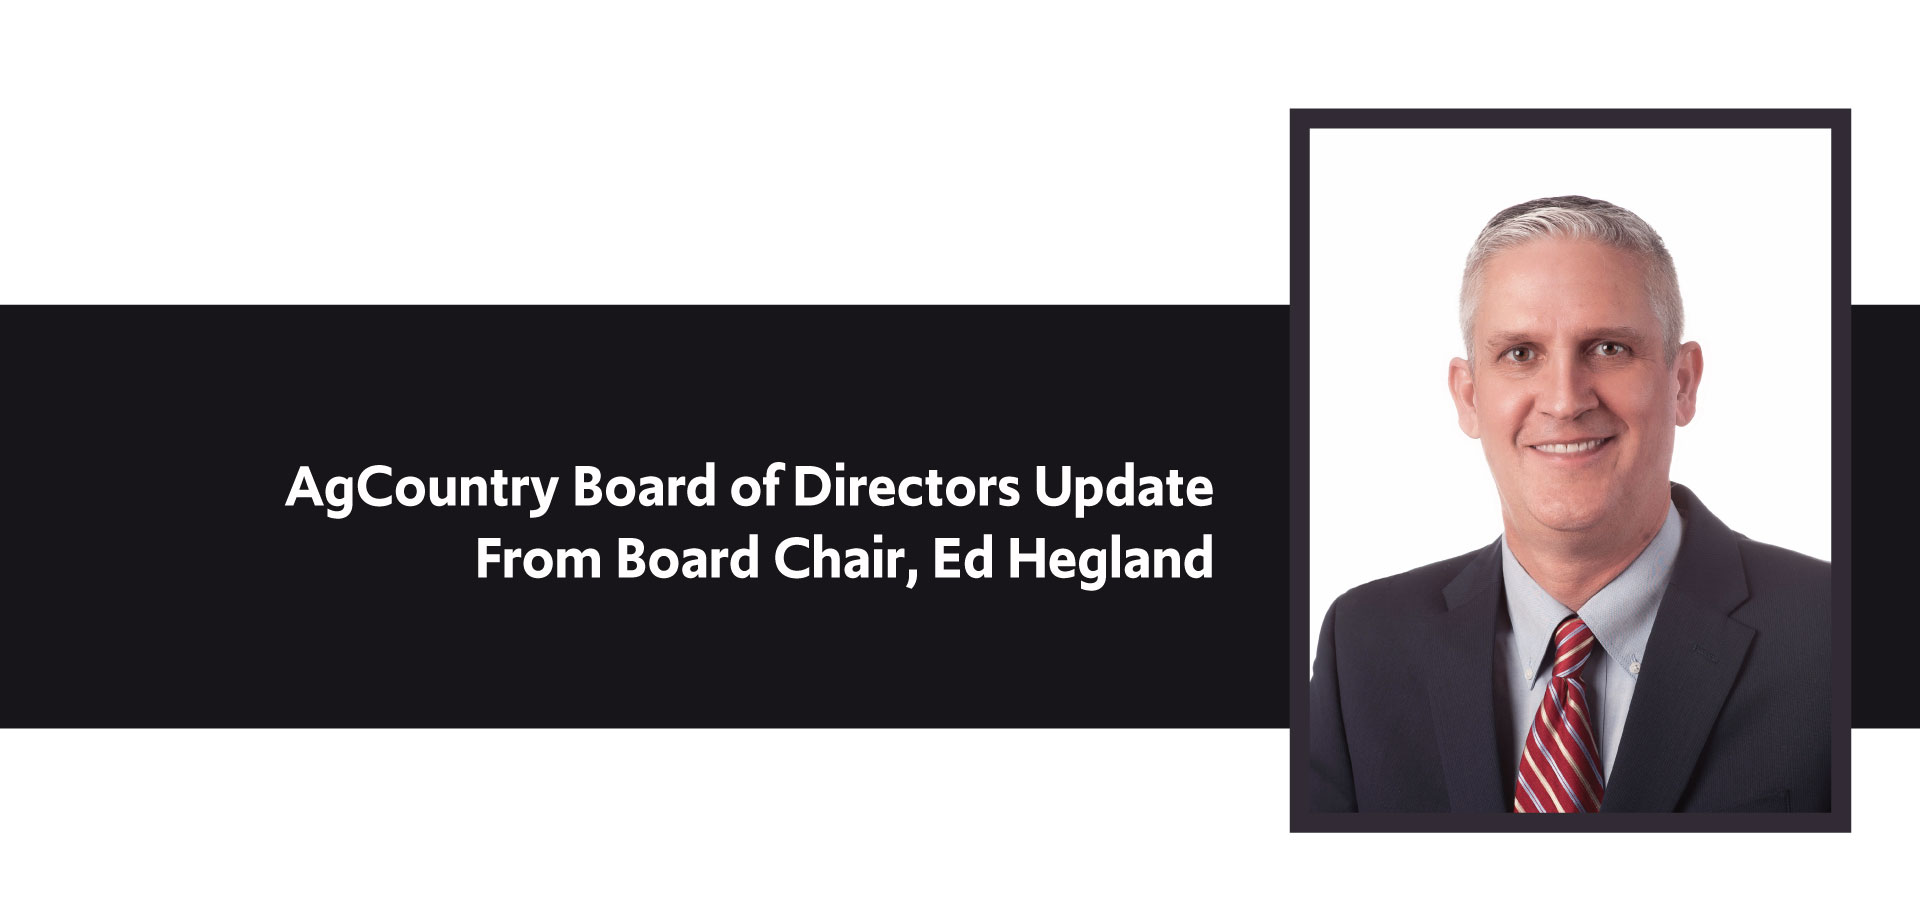 Ed Hegland, board chair